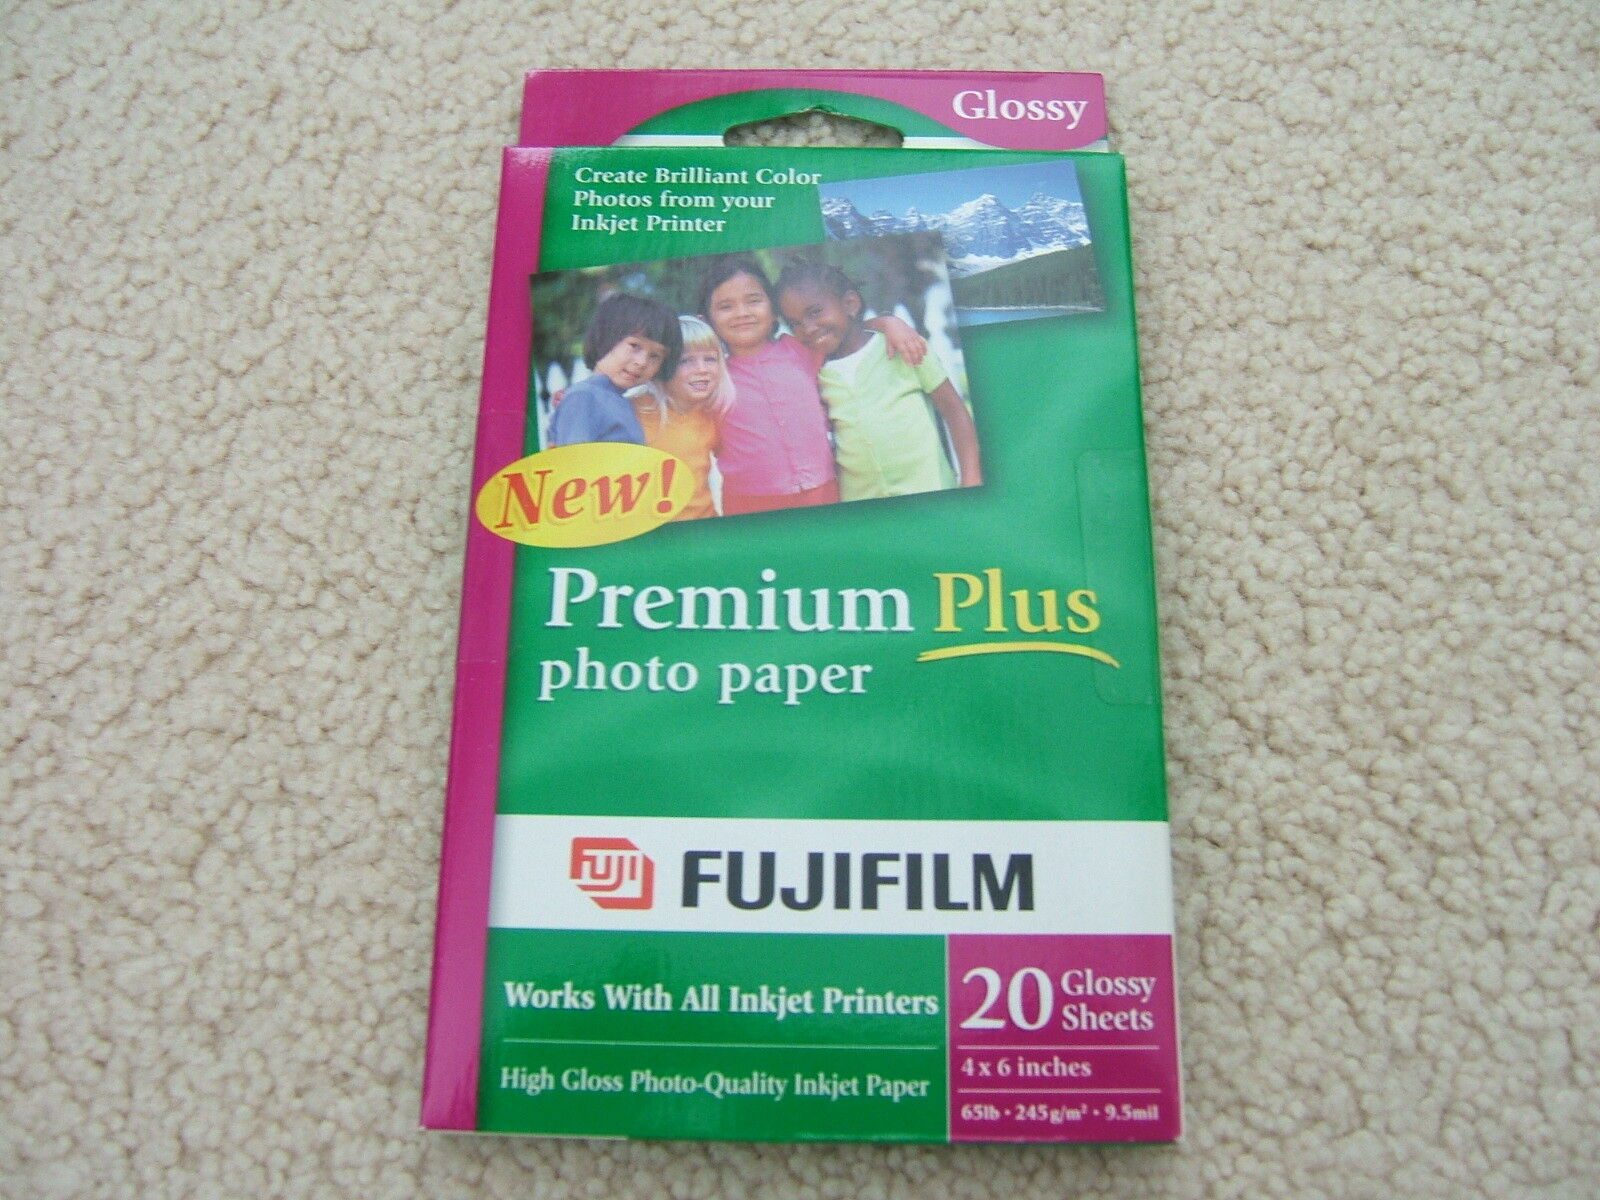 FUJIFILM PREMIUM PLUS PHOTO PAPER - 20 sheets - Glossy - 4\